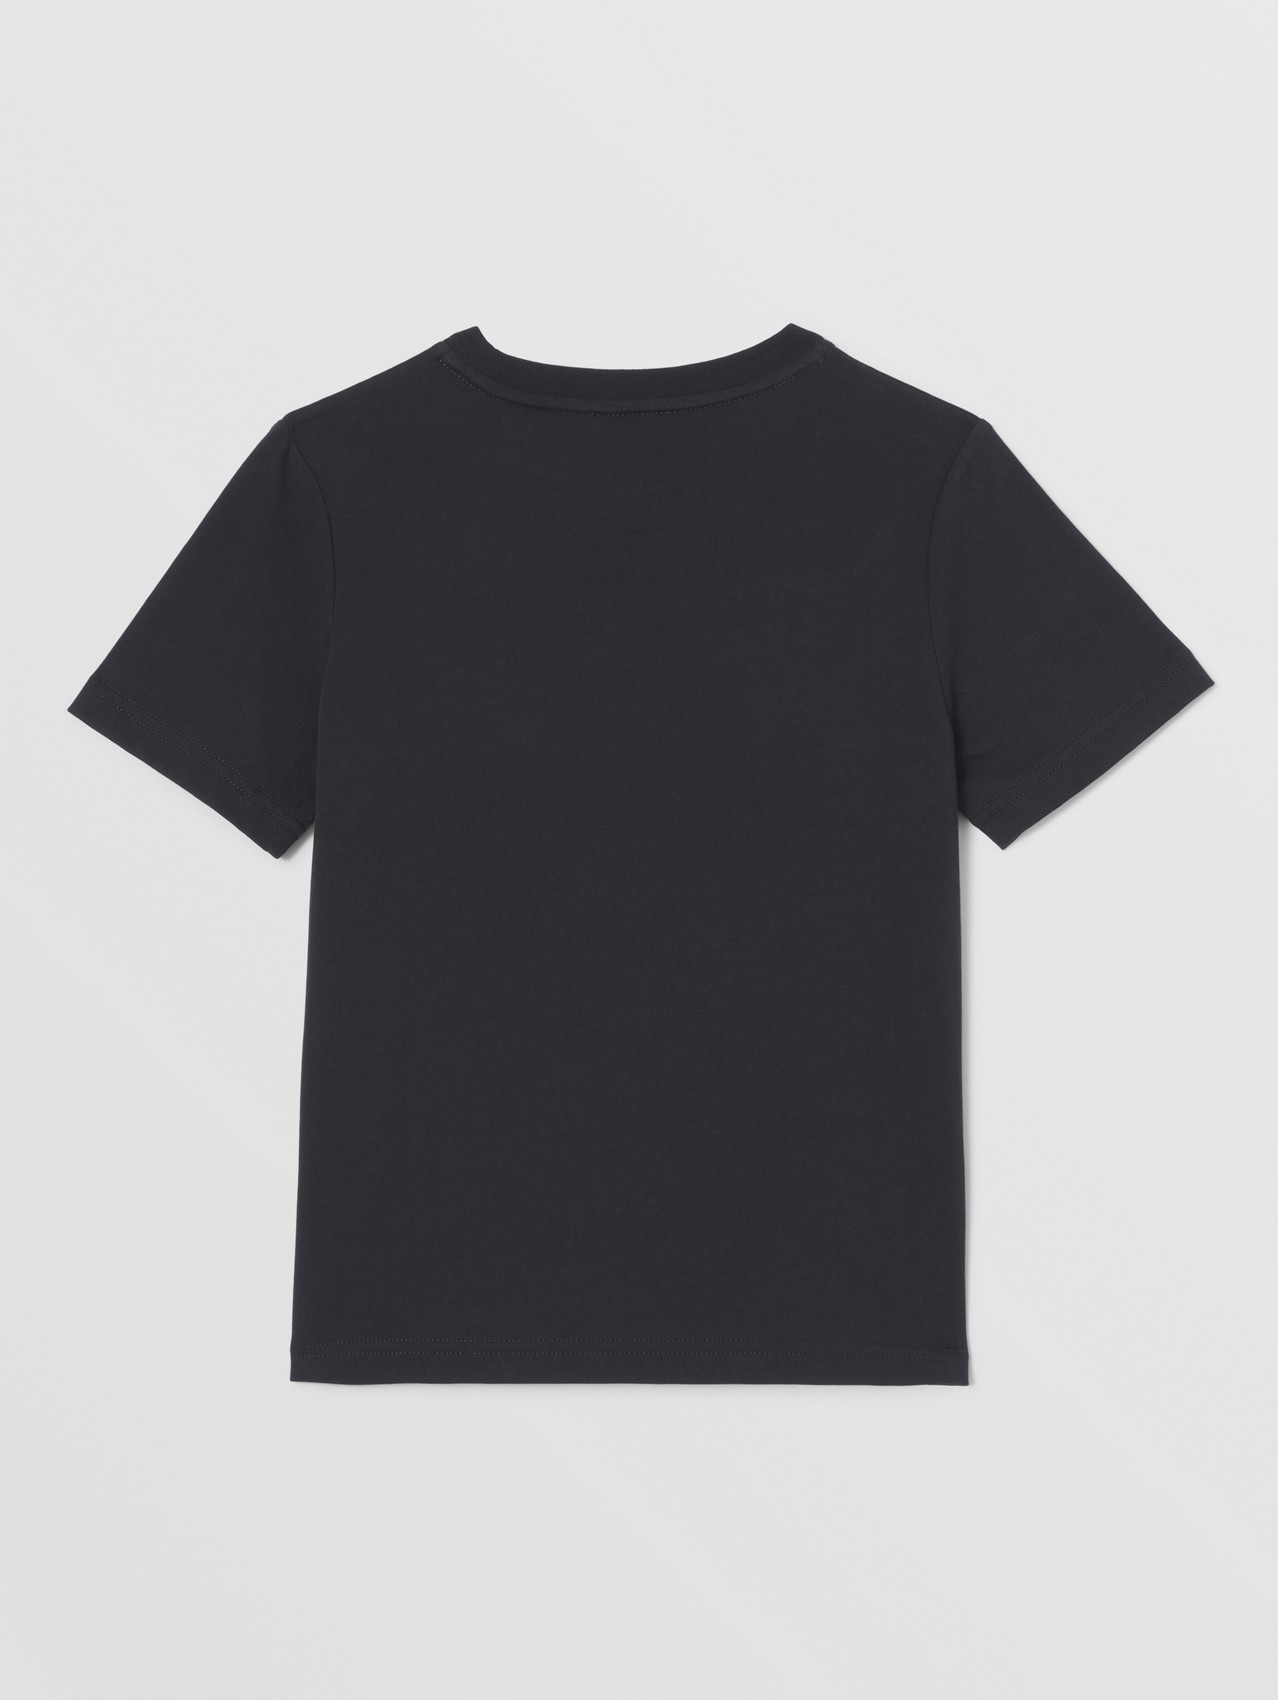 Montage Print Cotton T-shirt in Black